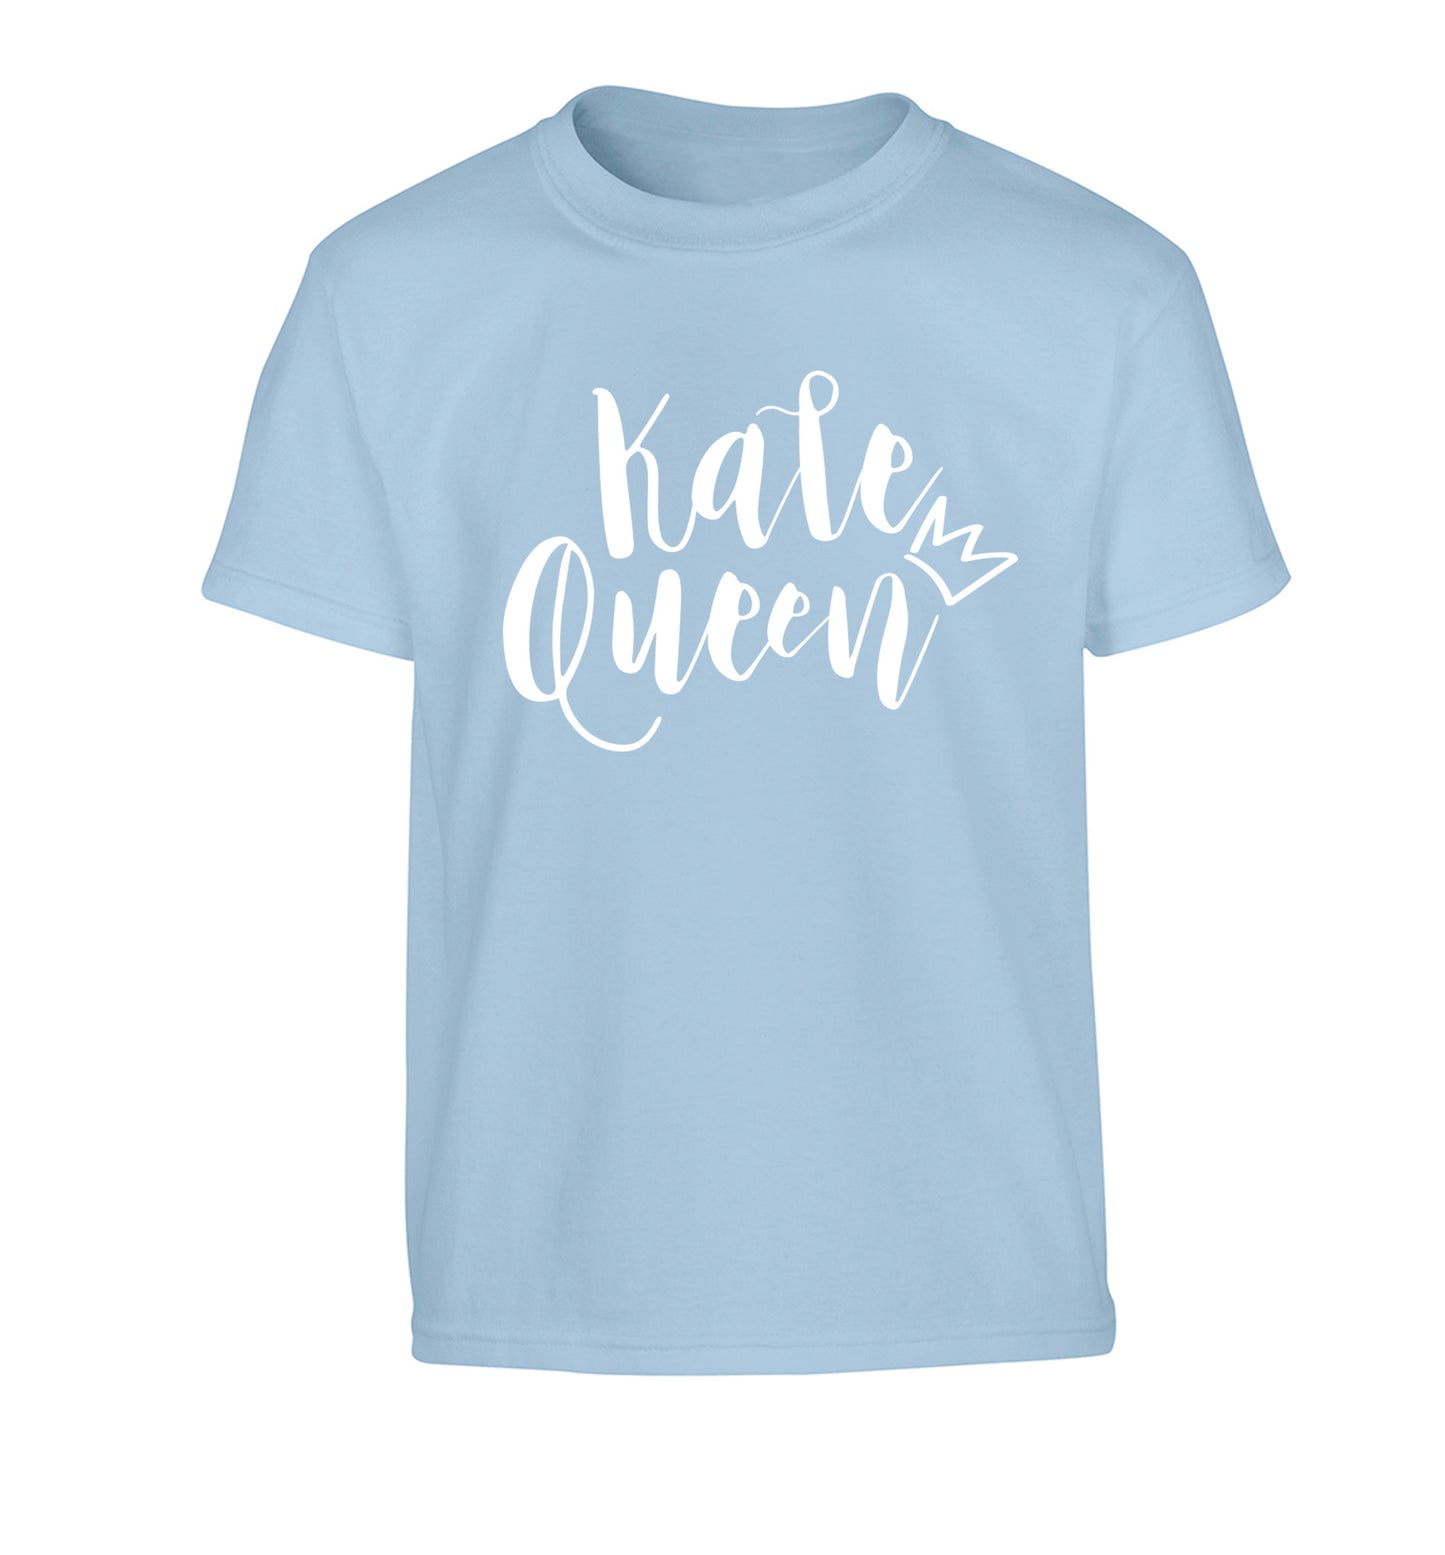 Kale Queen Children's light blue Tshirt 12-14 Years